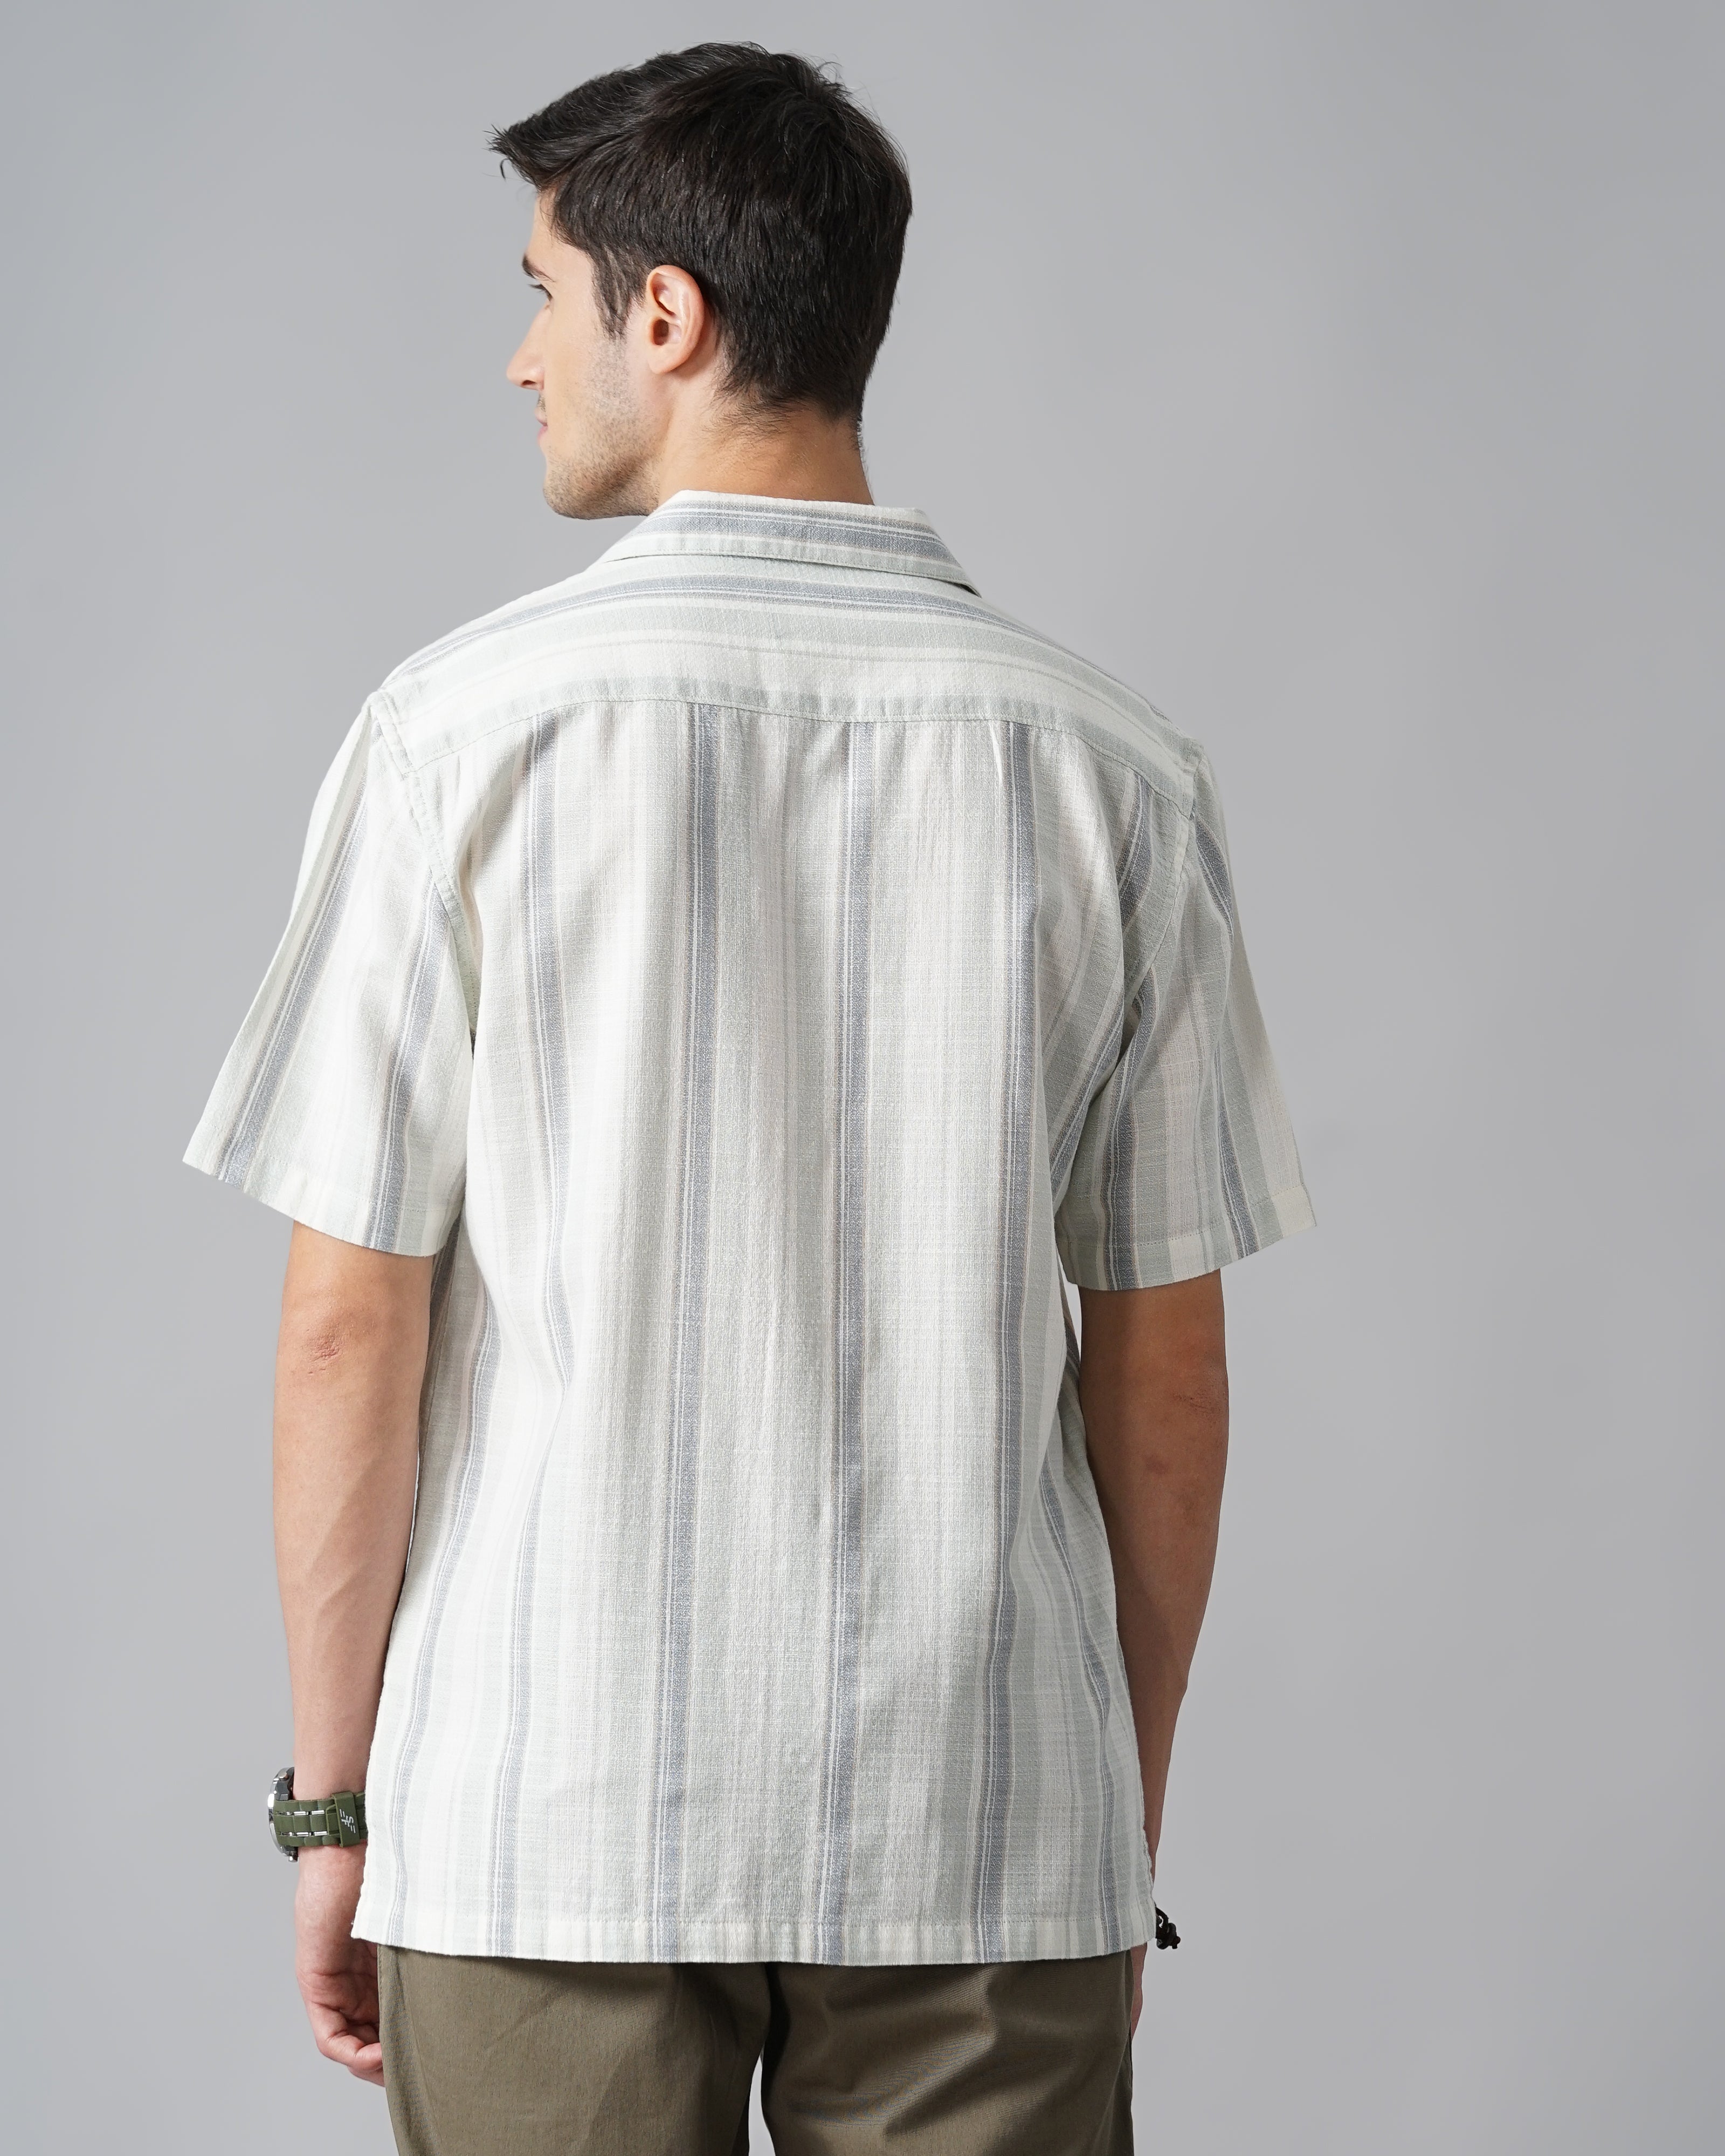 Men's StripeS Shirt